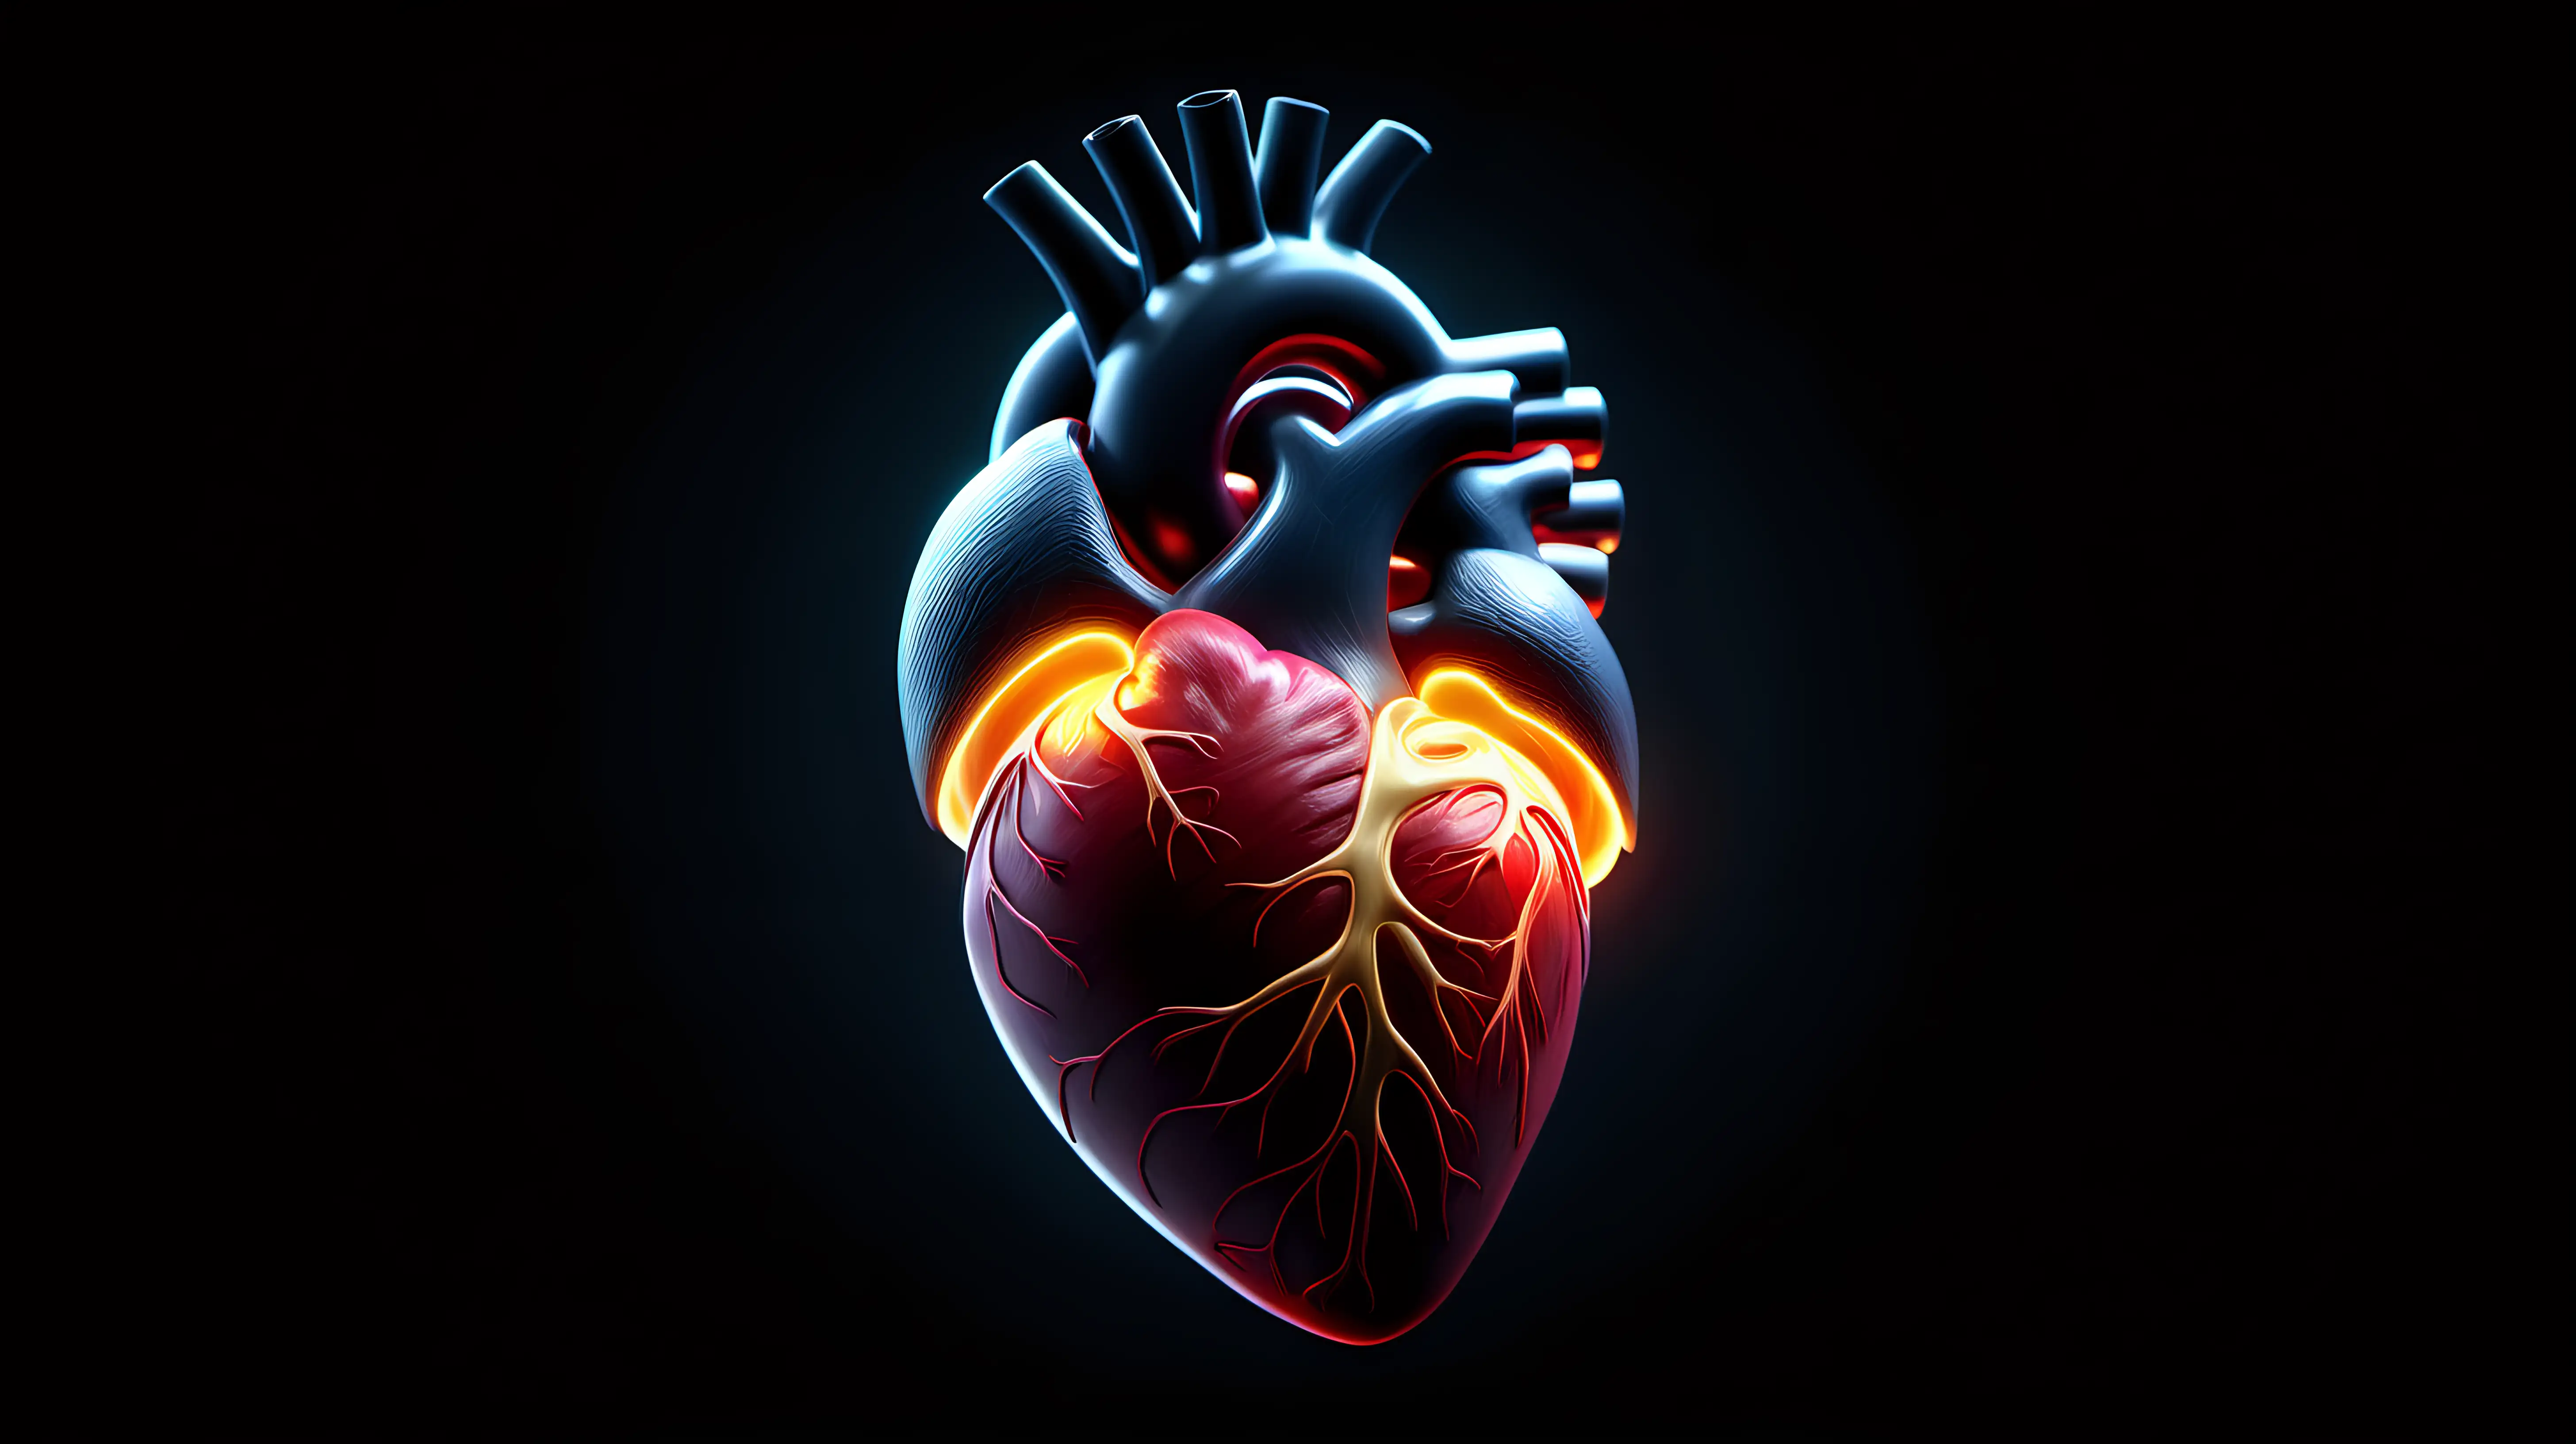 Glowing Human Heart Illustration Symbolizing Vitality and Health